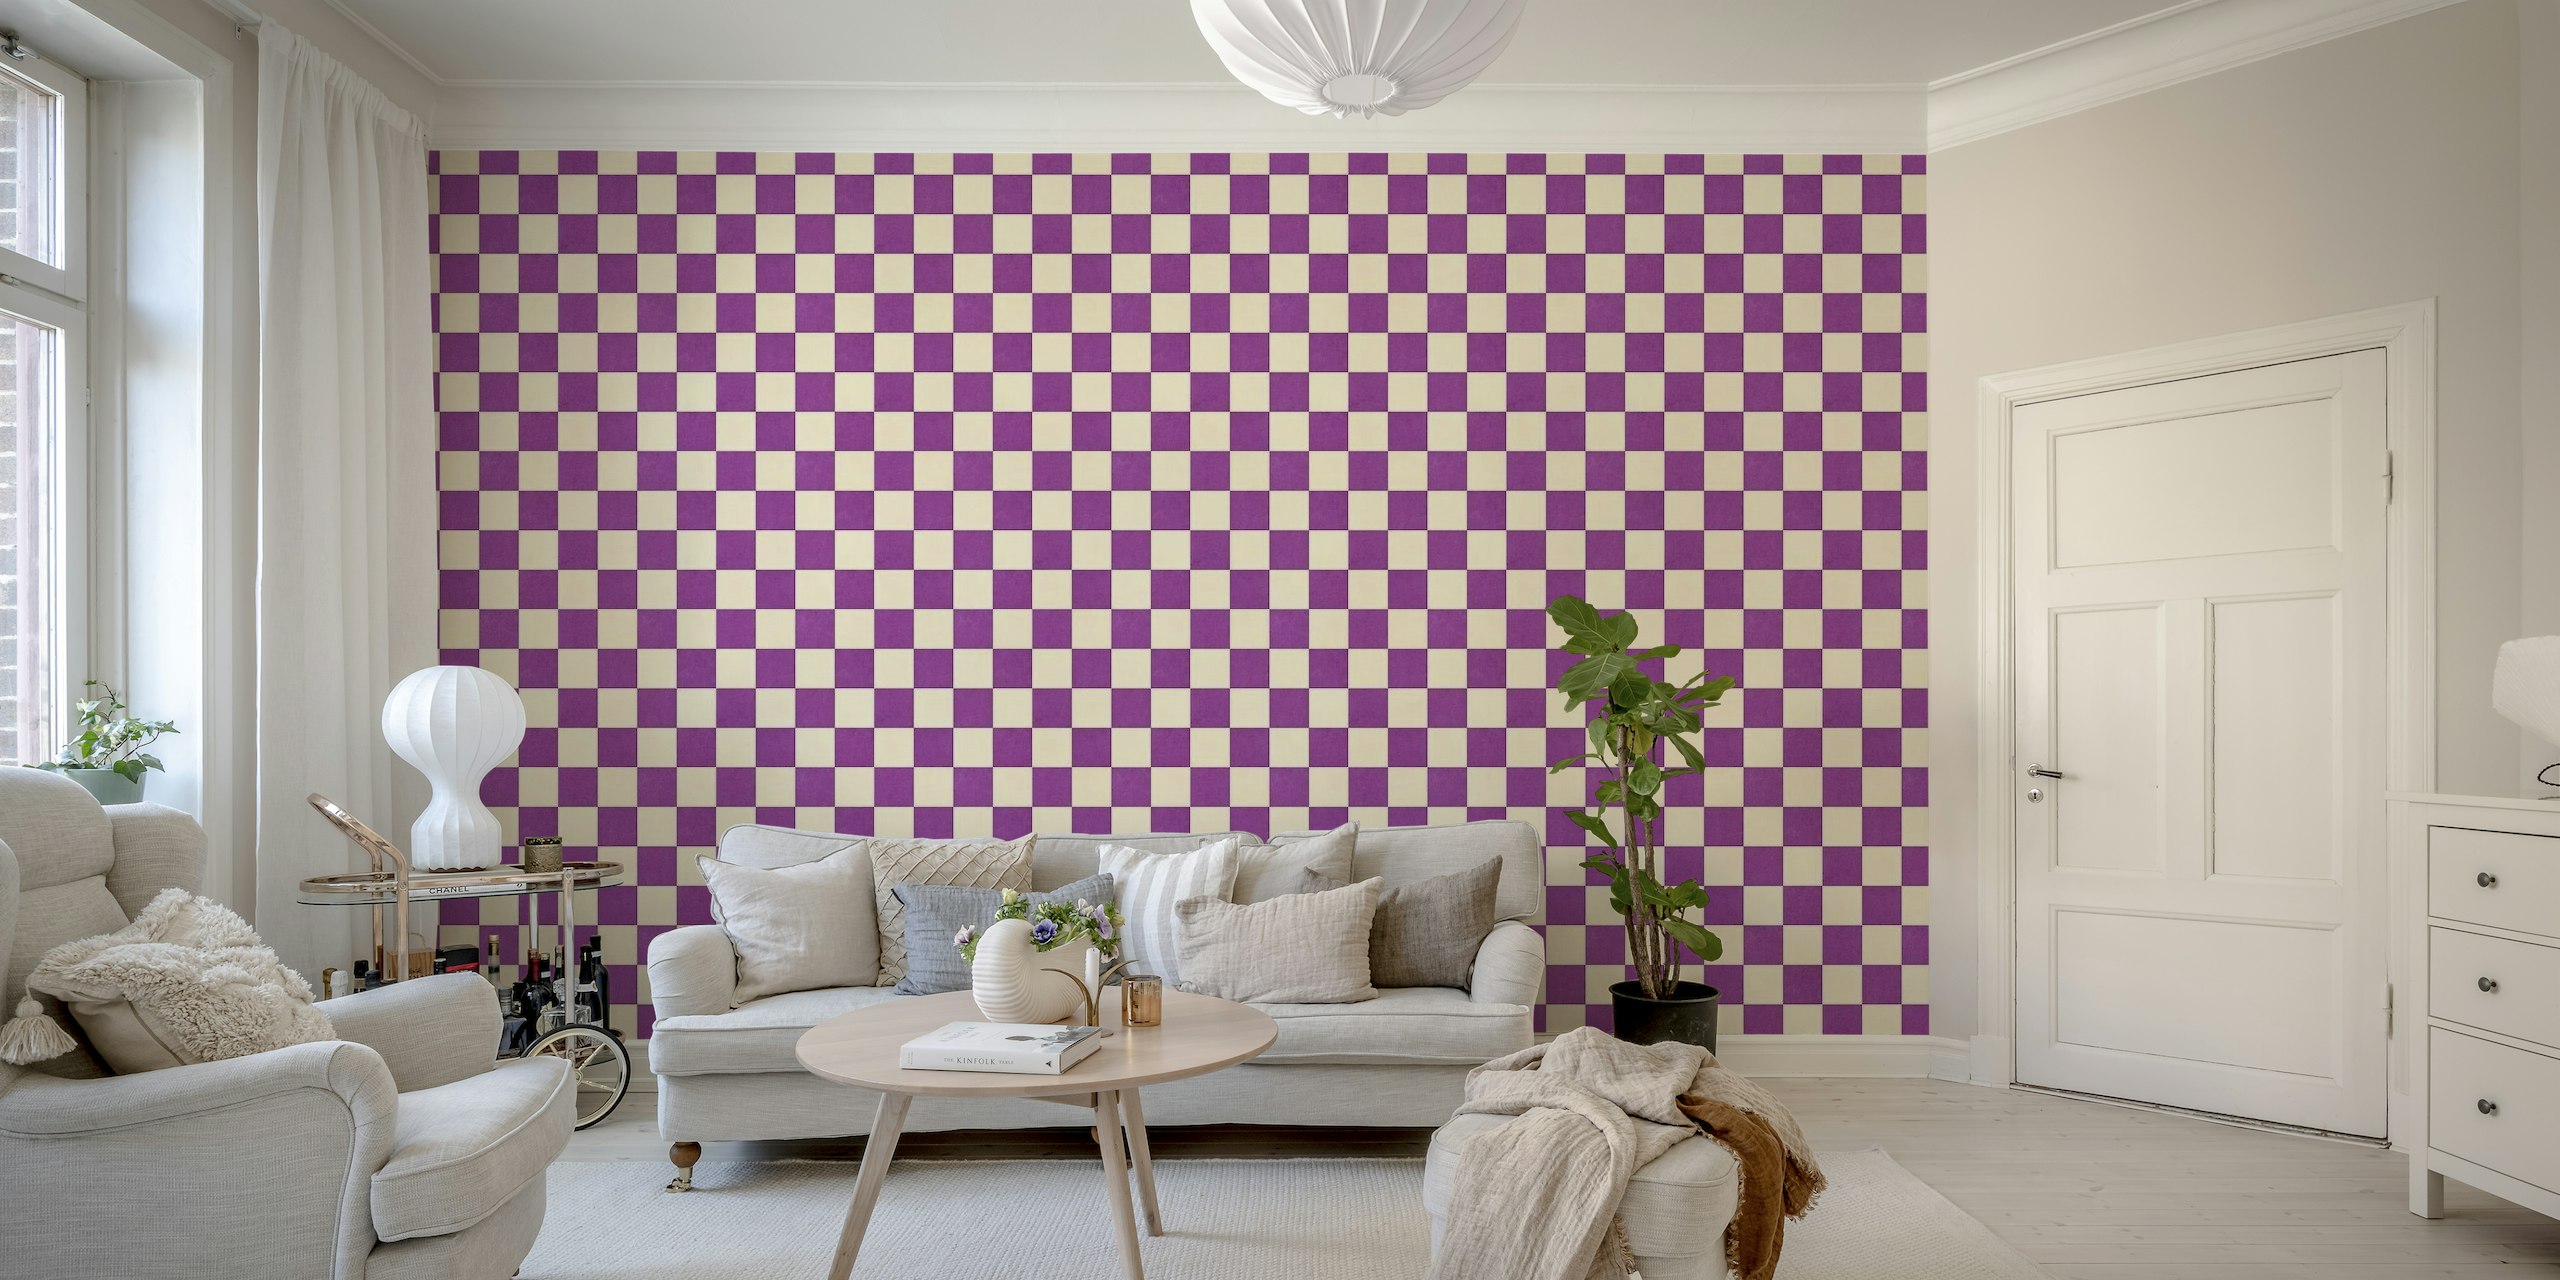 TILES 012 J - Checkerboard wallpaper